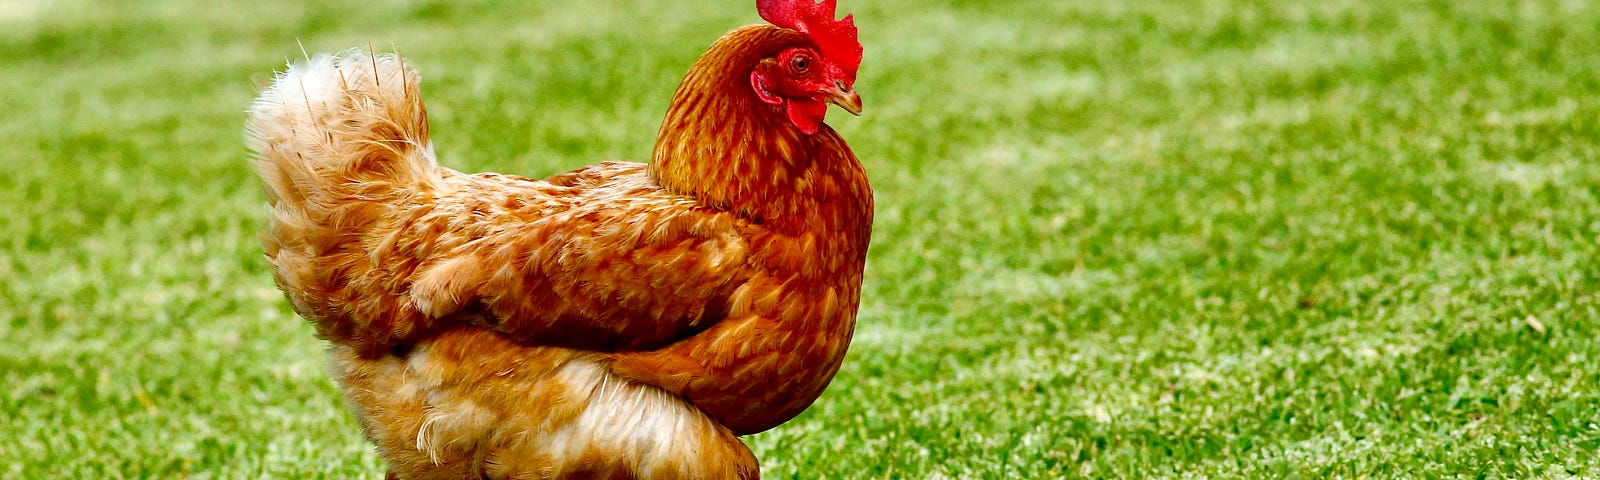 A red chicken struts across a green lawn